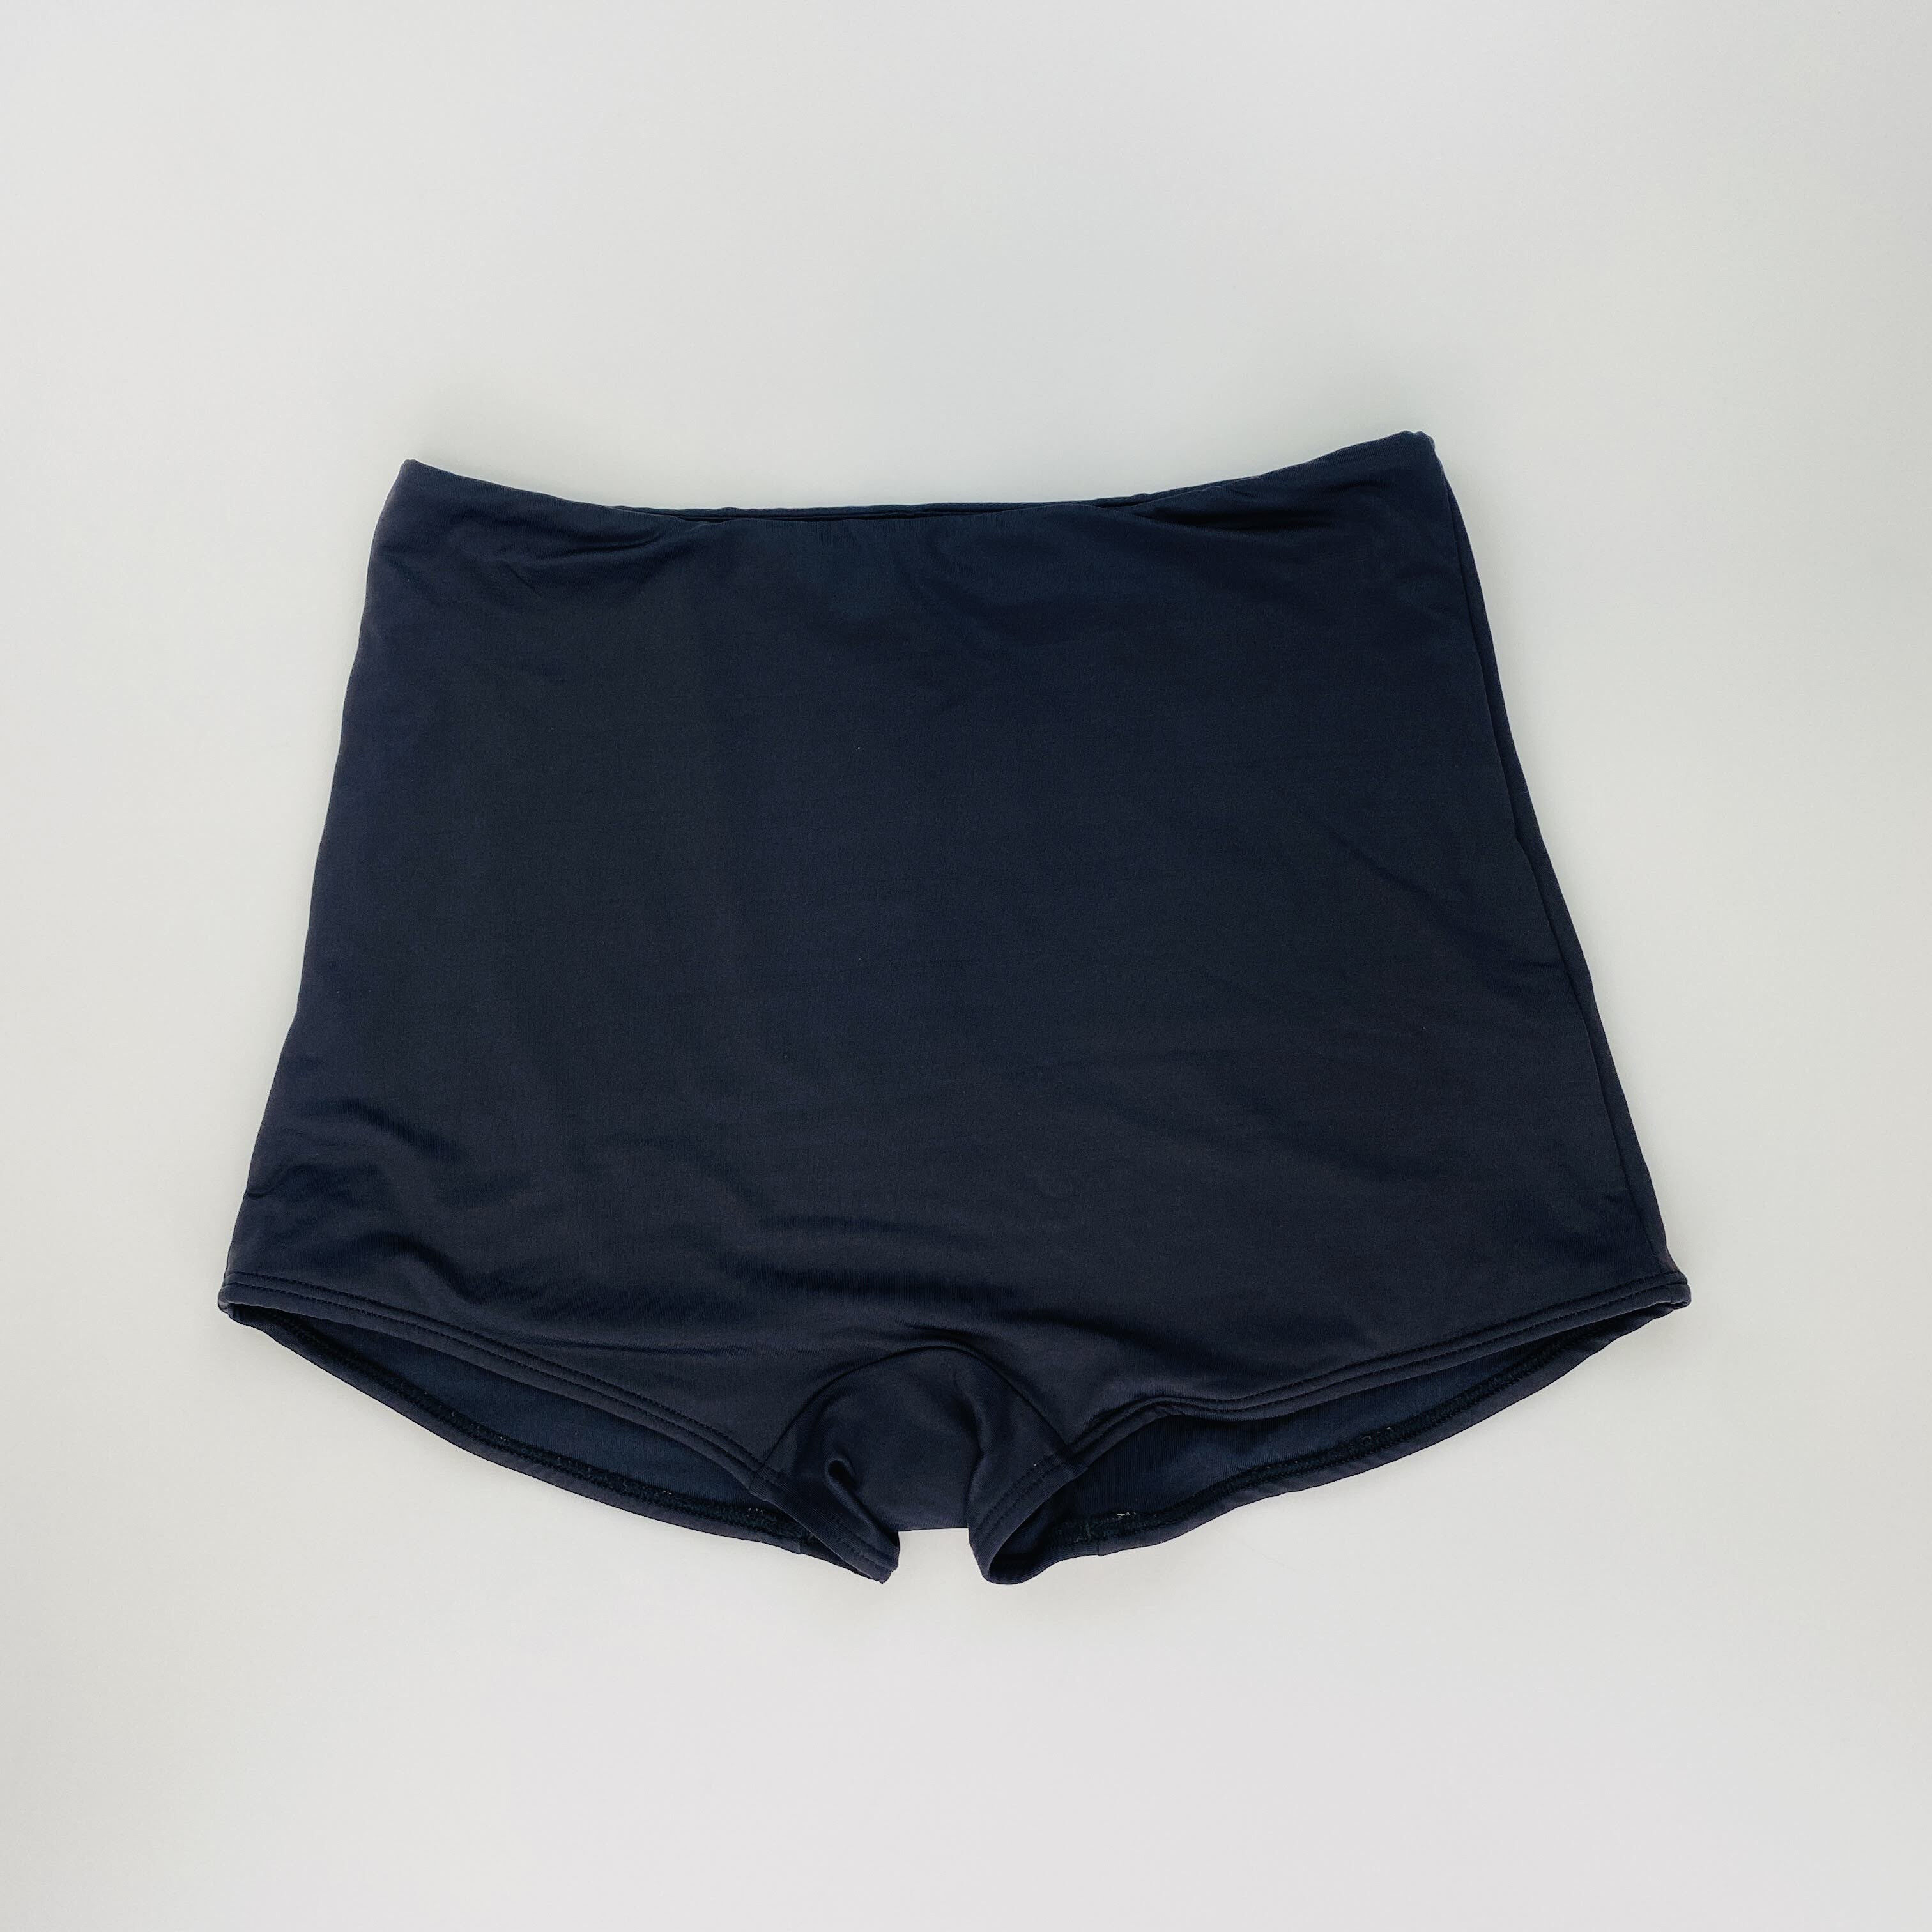 Patagonia W's Sunamee Shortie Bottom - Seconde main Bas maillot de bain 2 pièces femme - Noir - S | Hardloop